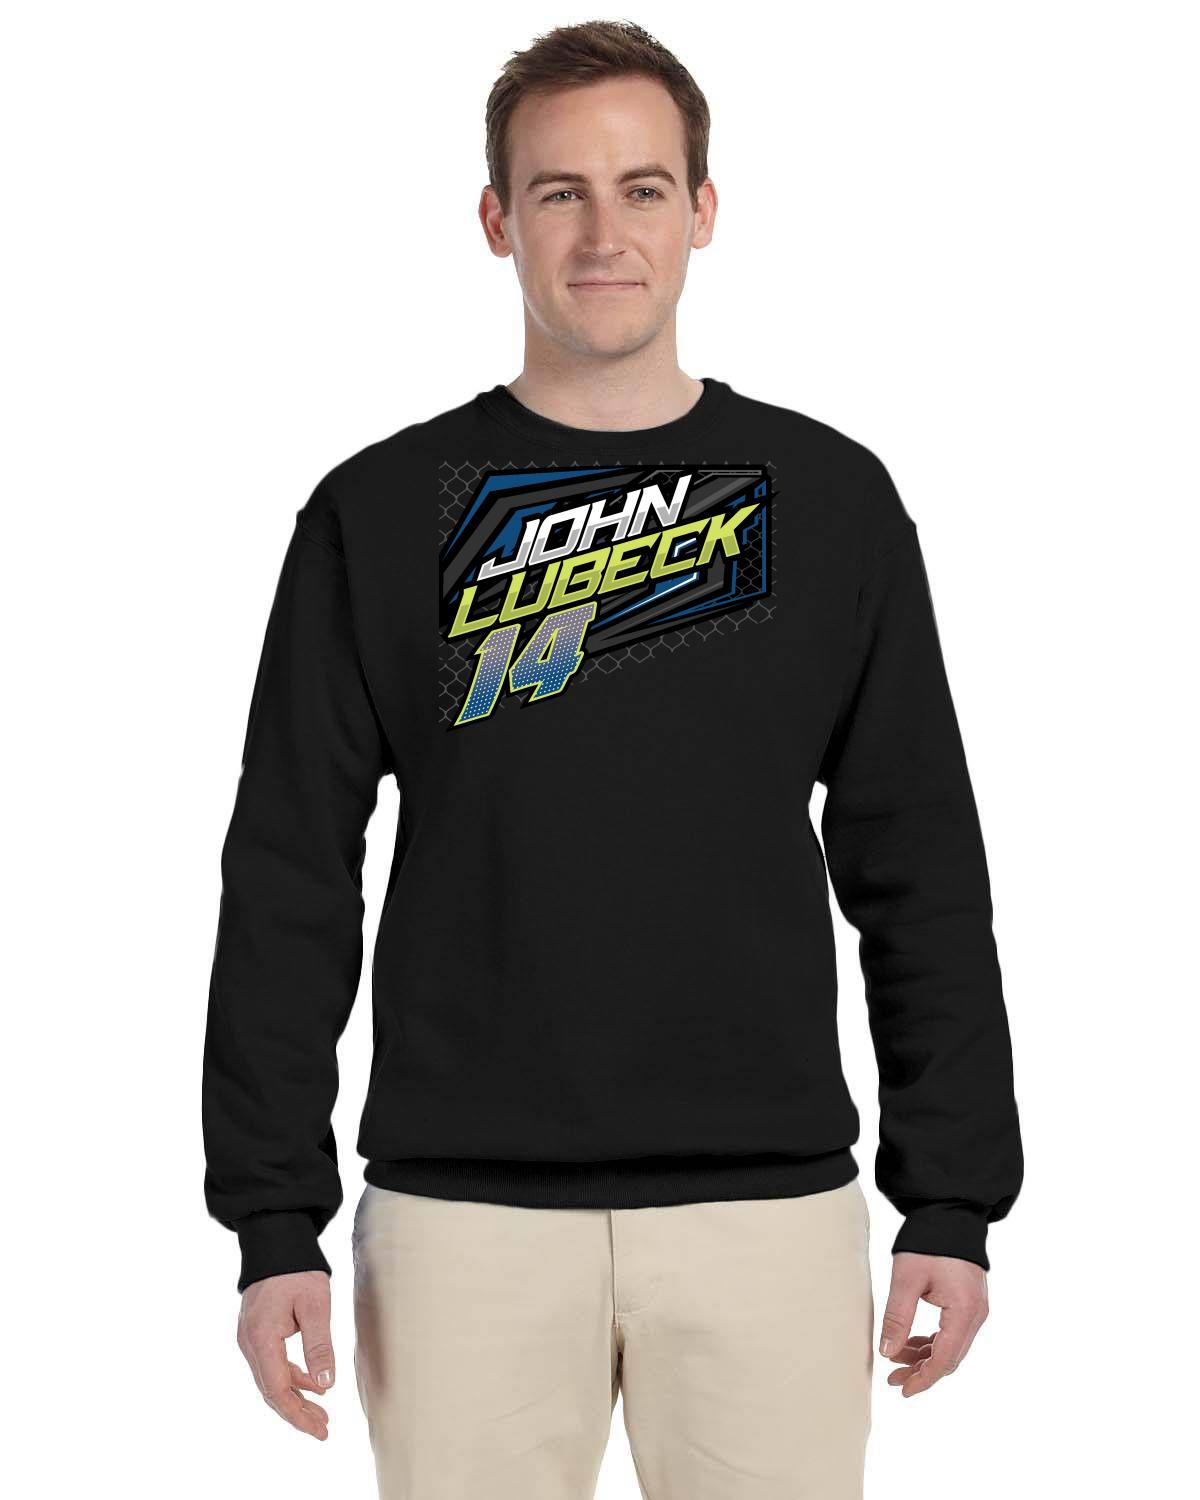 John Lubeck / Upfront Motorsports Crew neck sweater